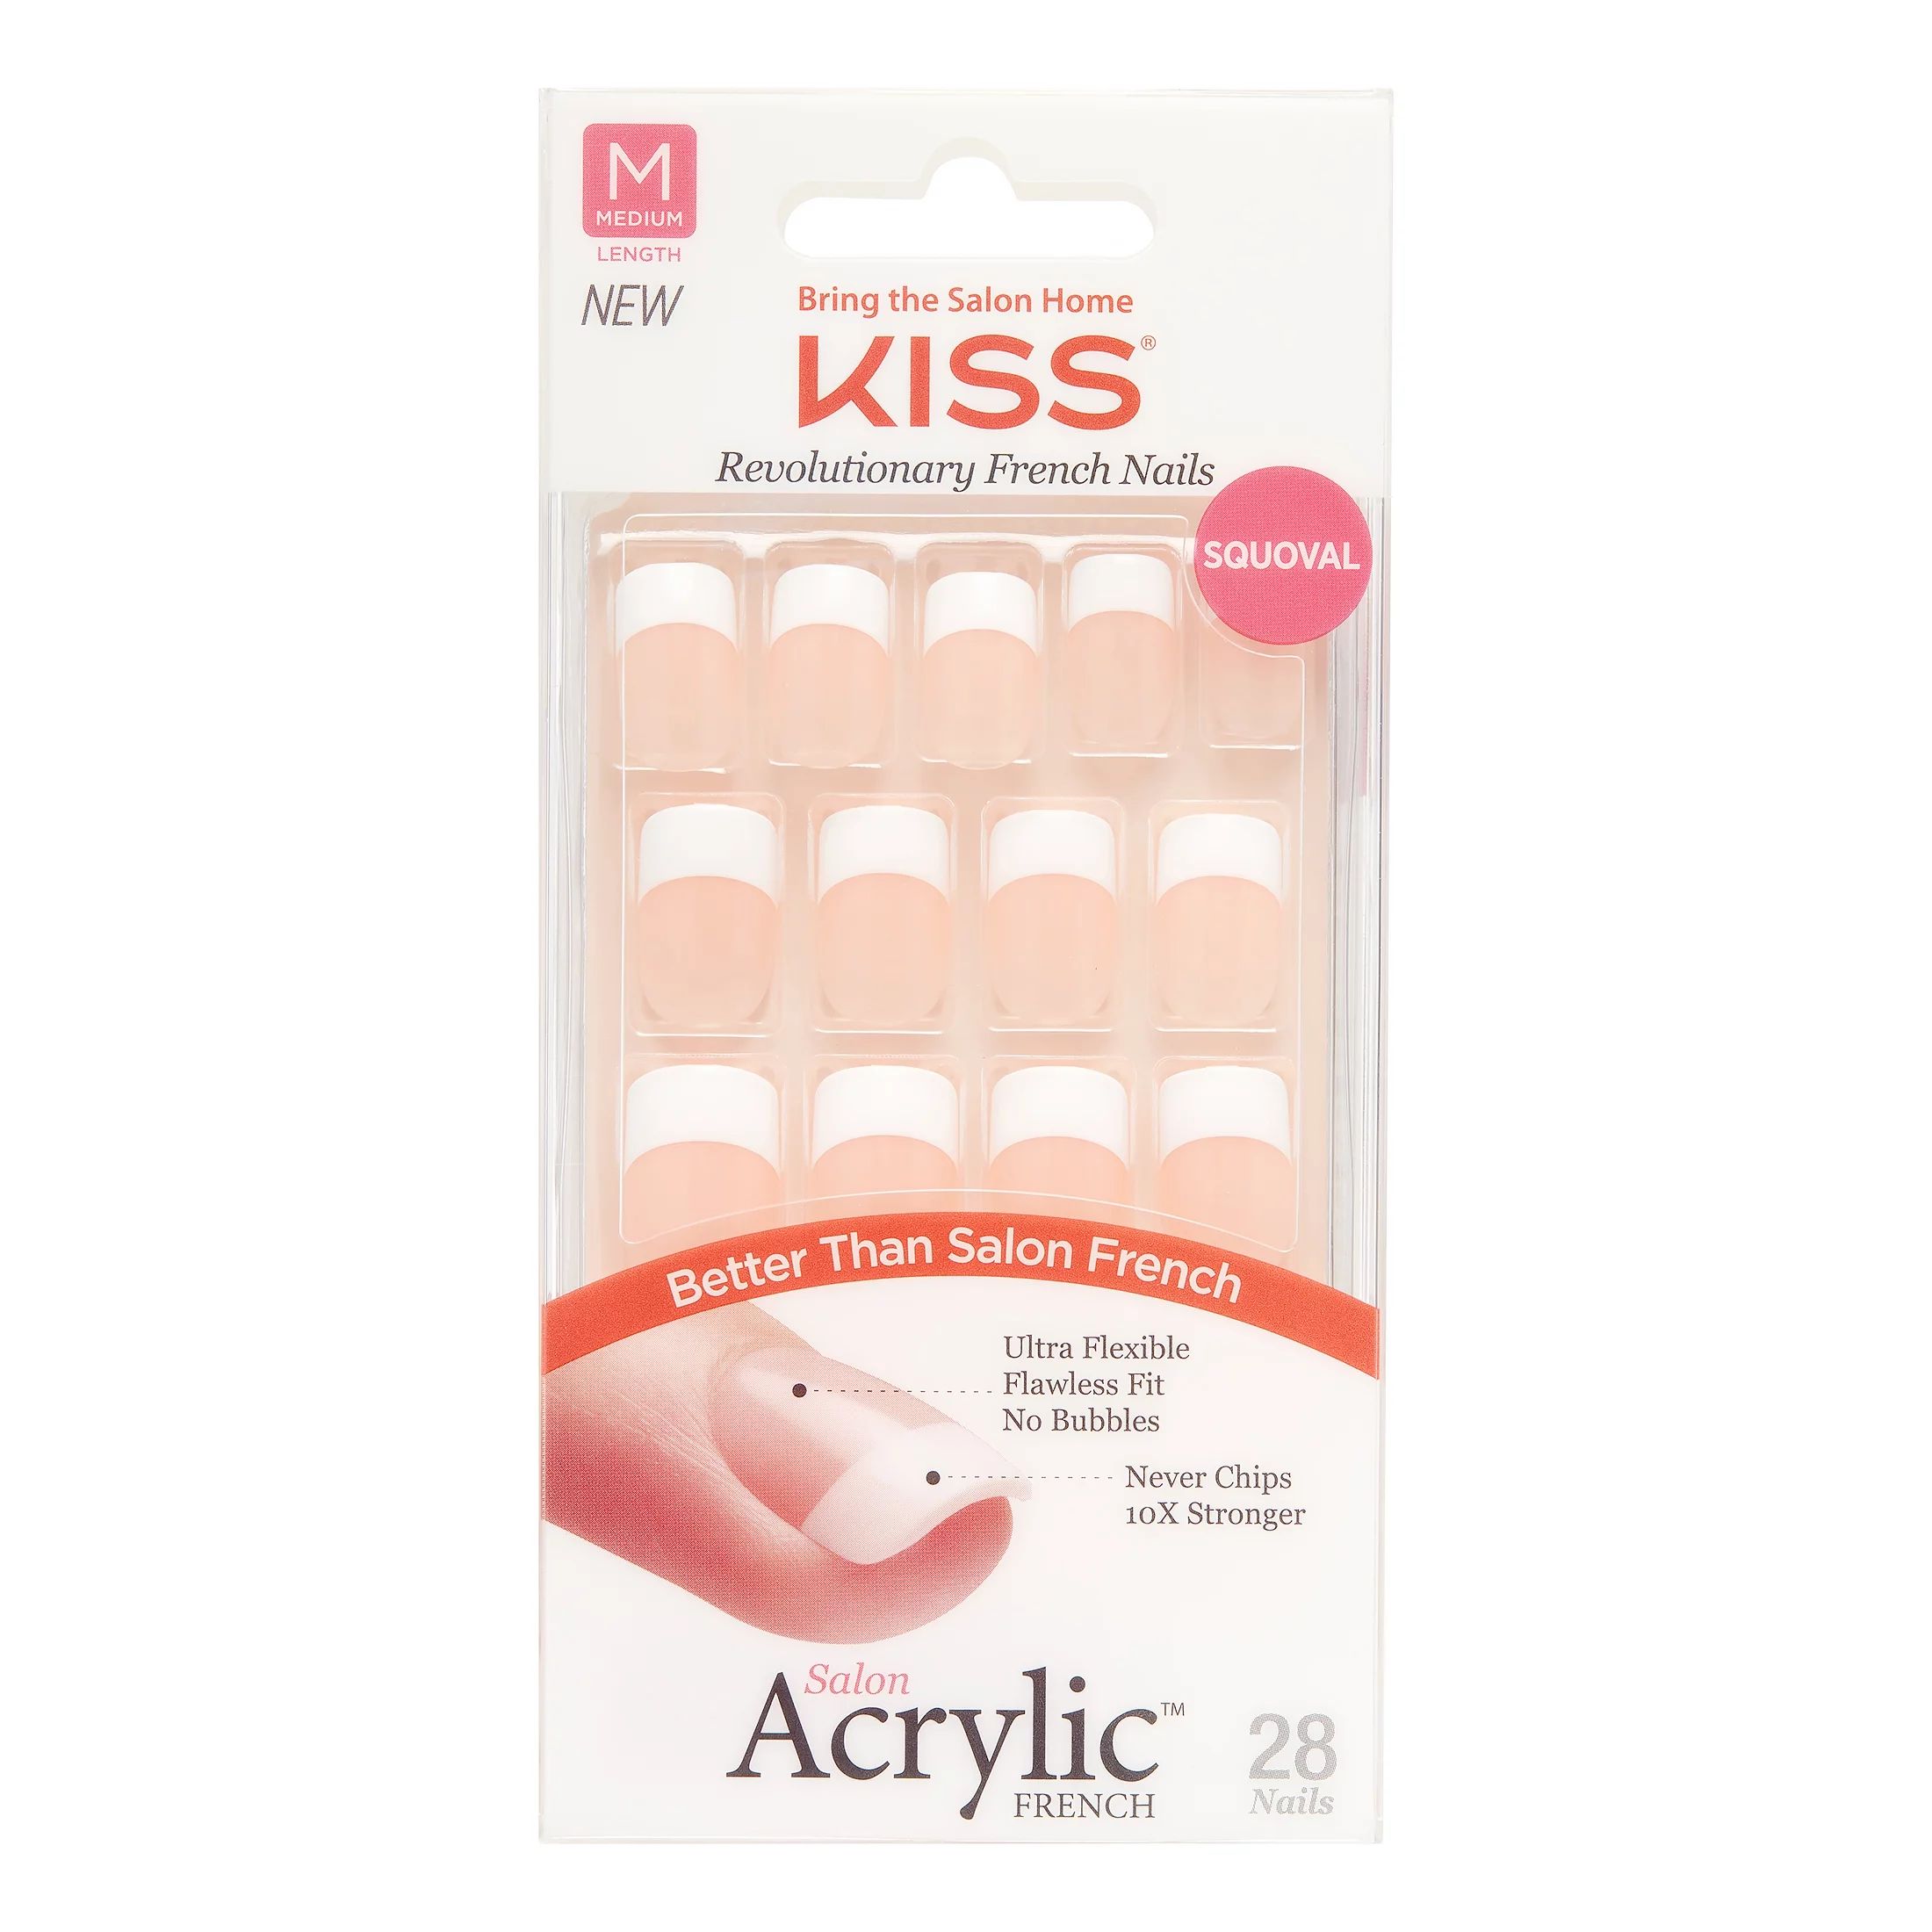 KISS Salon Acrylic French Nail Kit - Rumour Mill | Walmart (US)